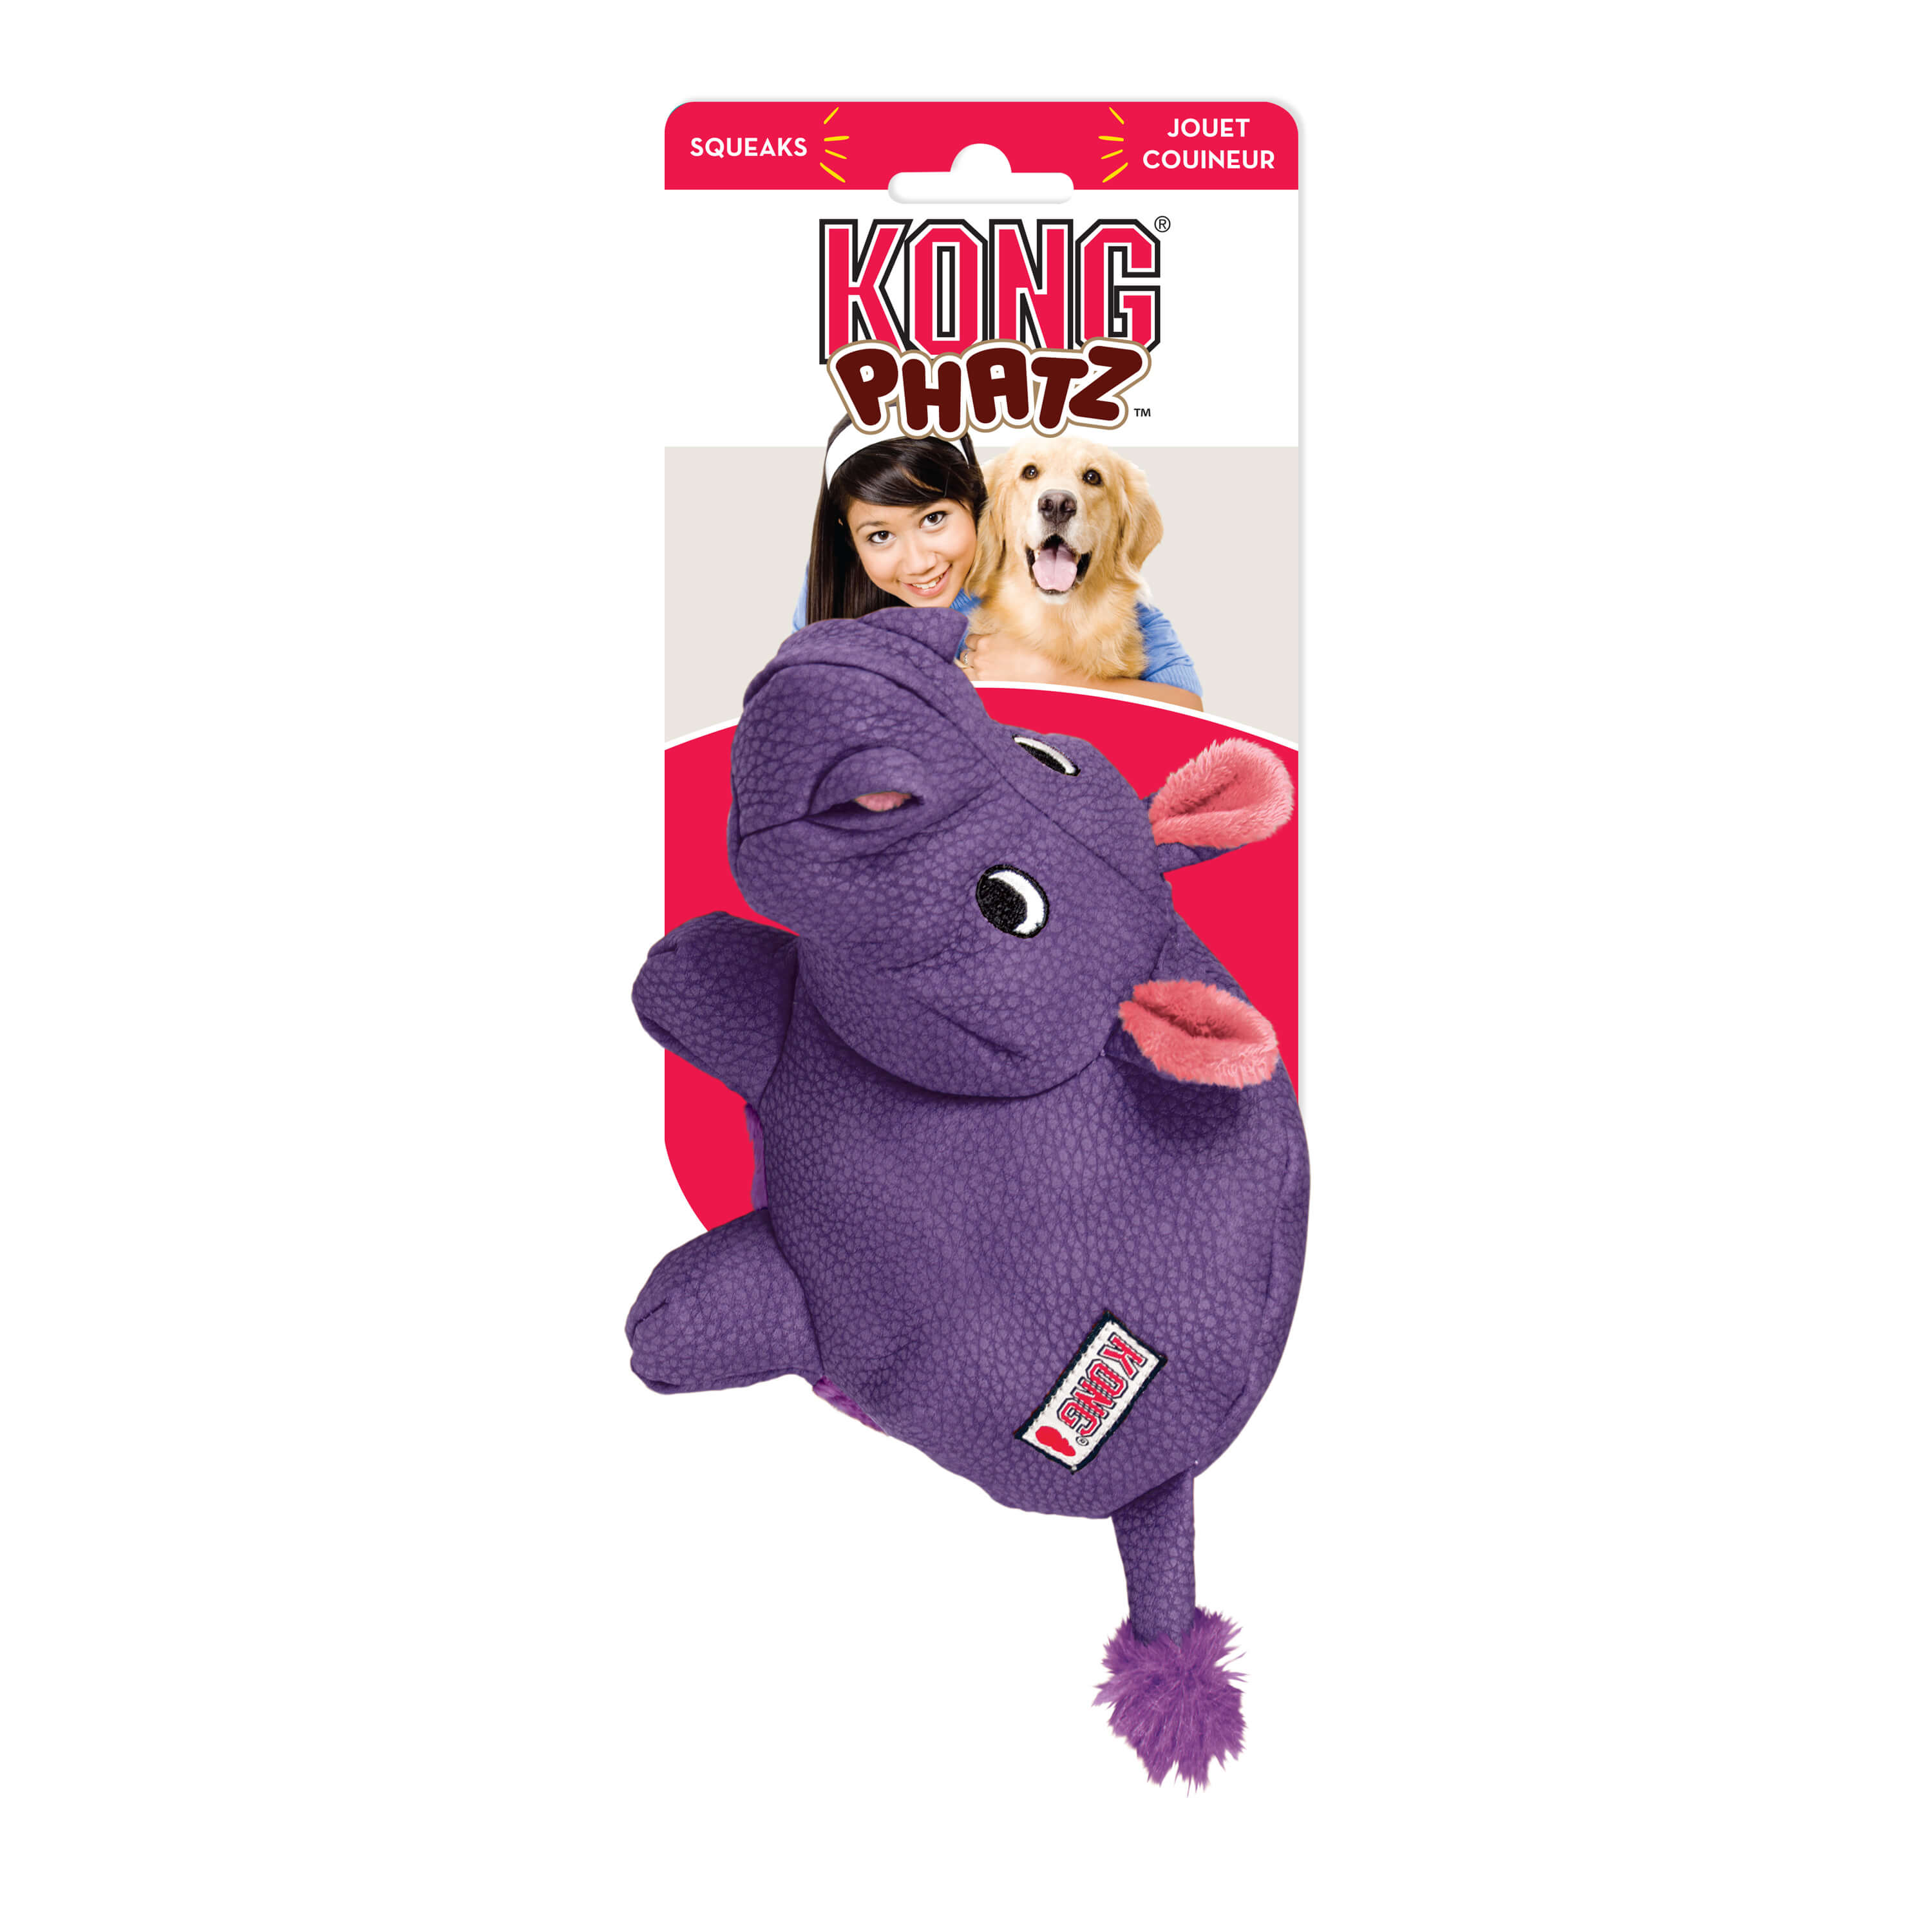 Kong dog toy - phatz hippo